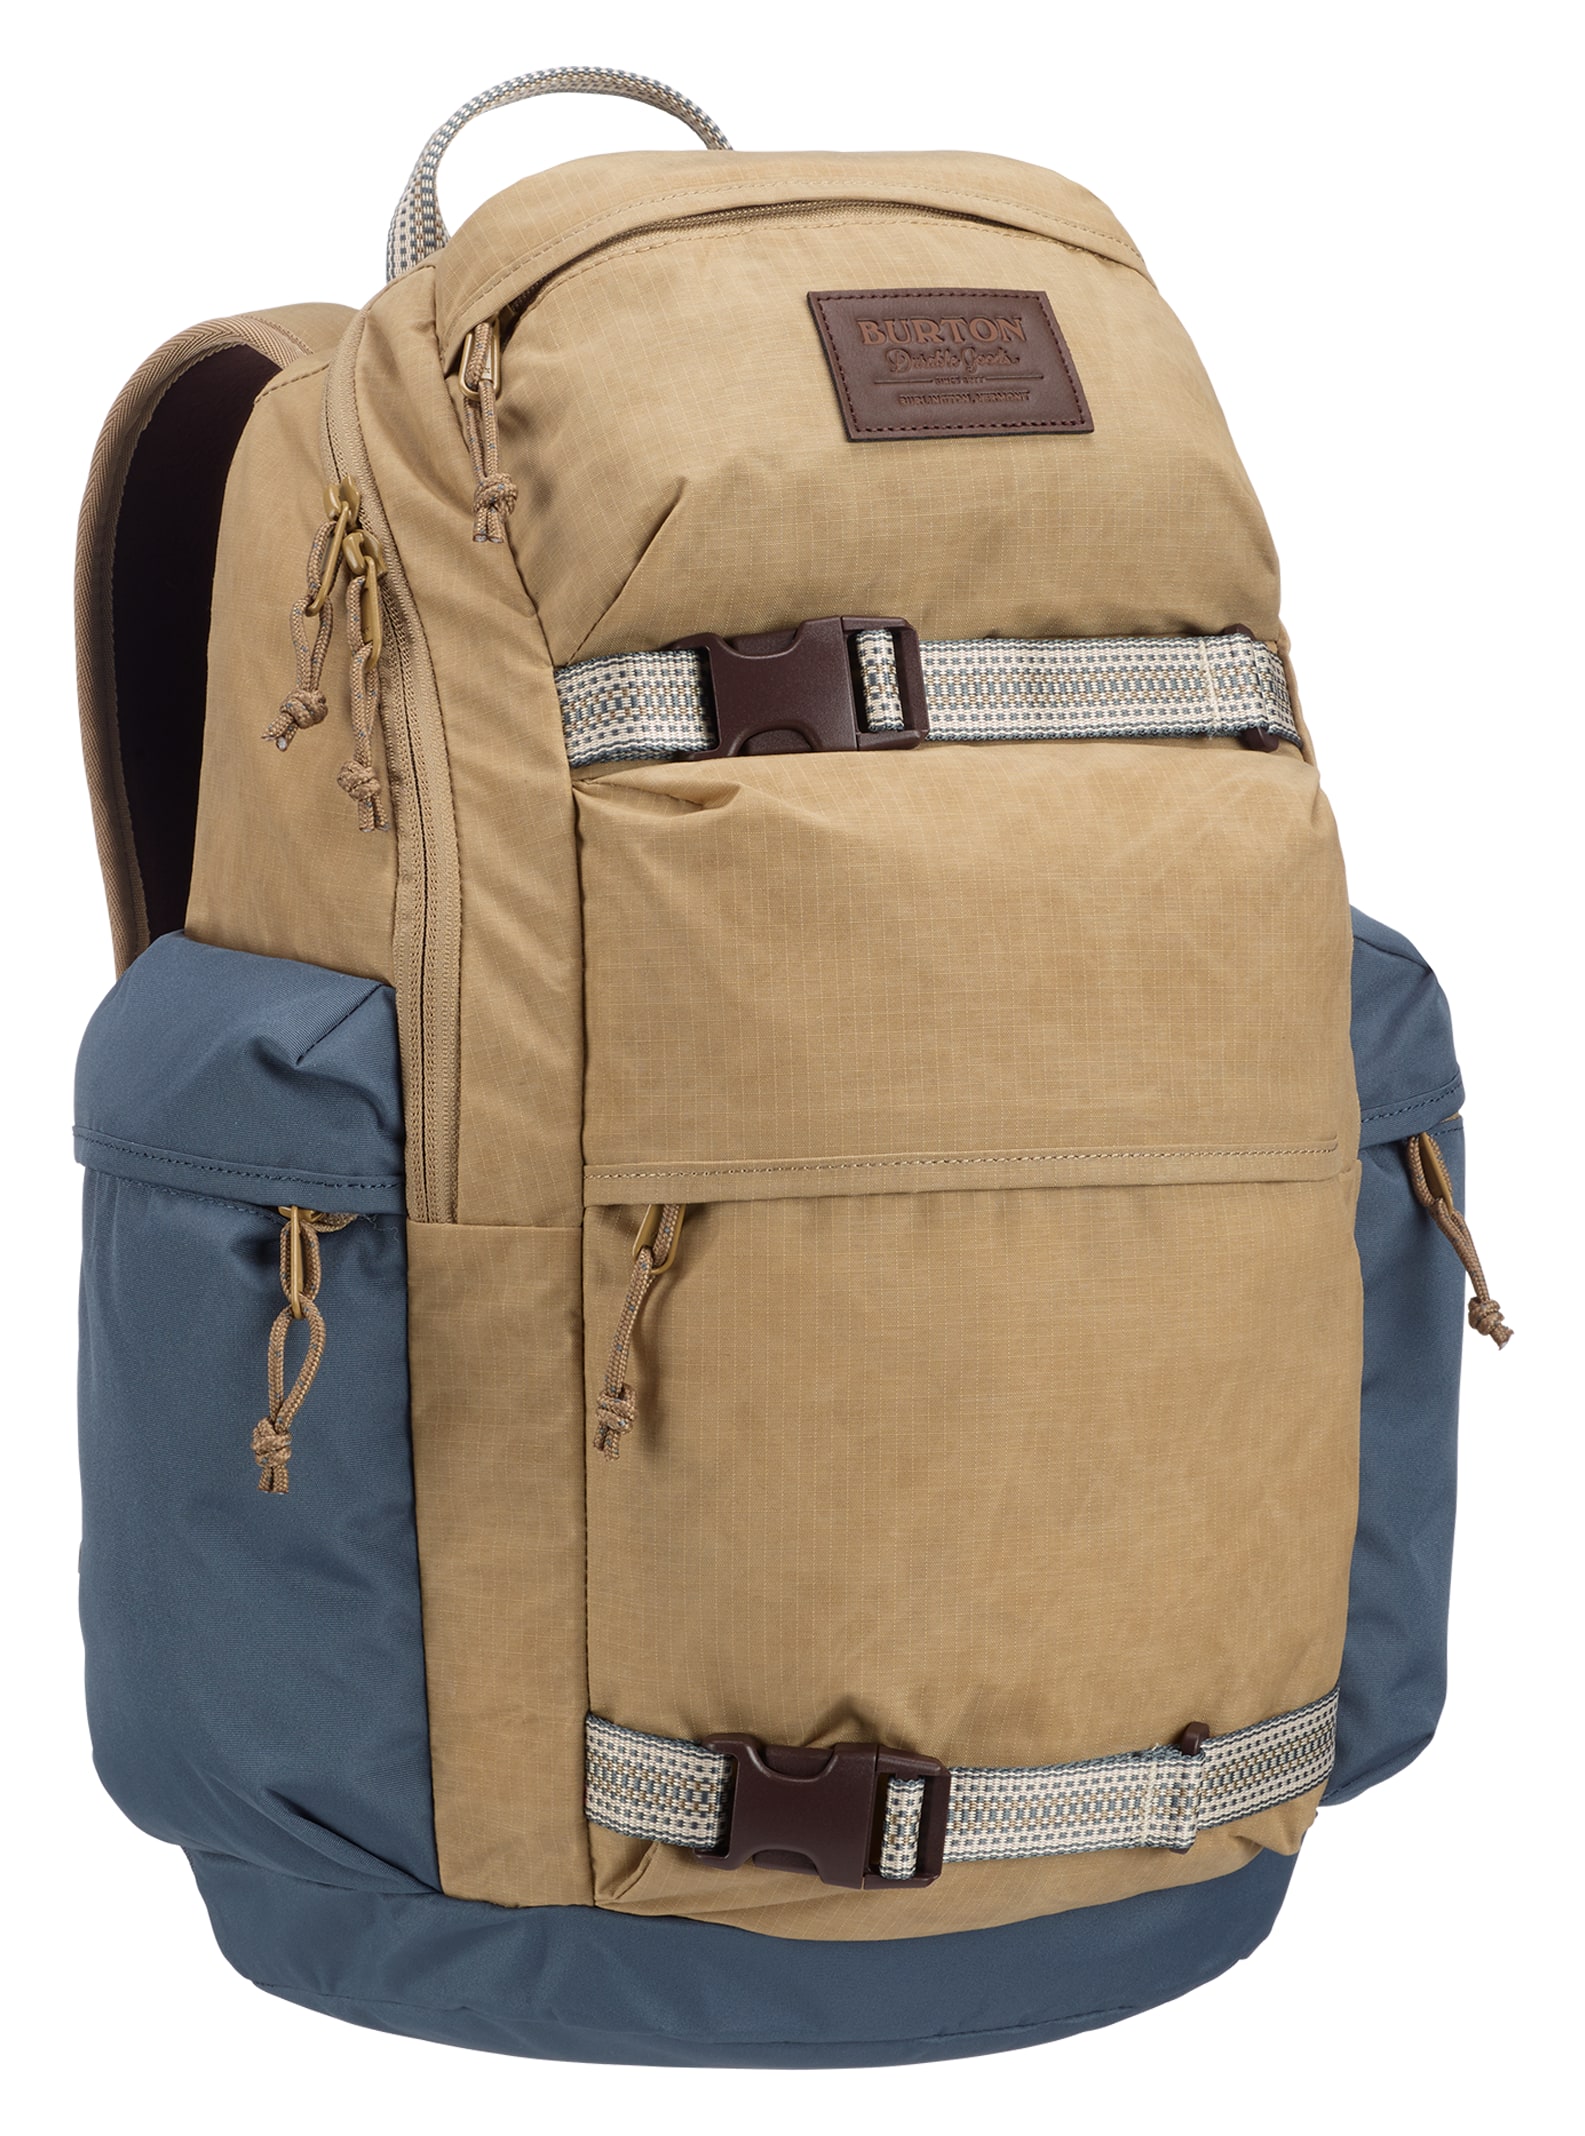 Burton Kilo 27L Backpack | Burton.com Spring / Summer 2019 US